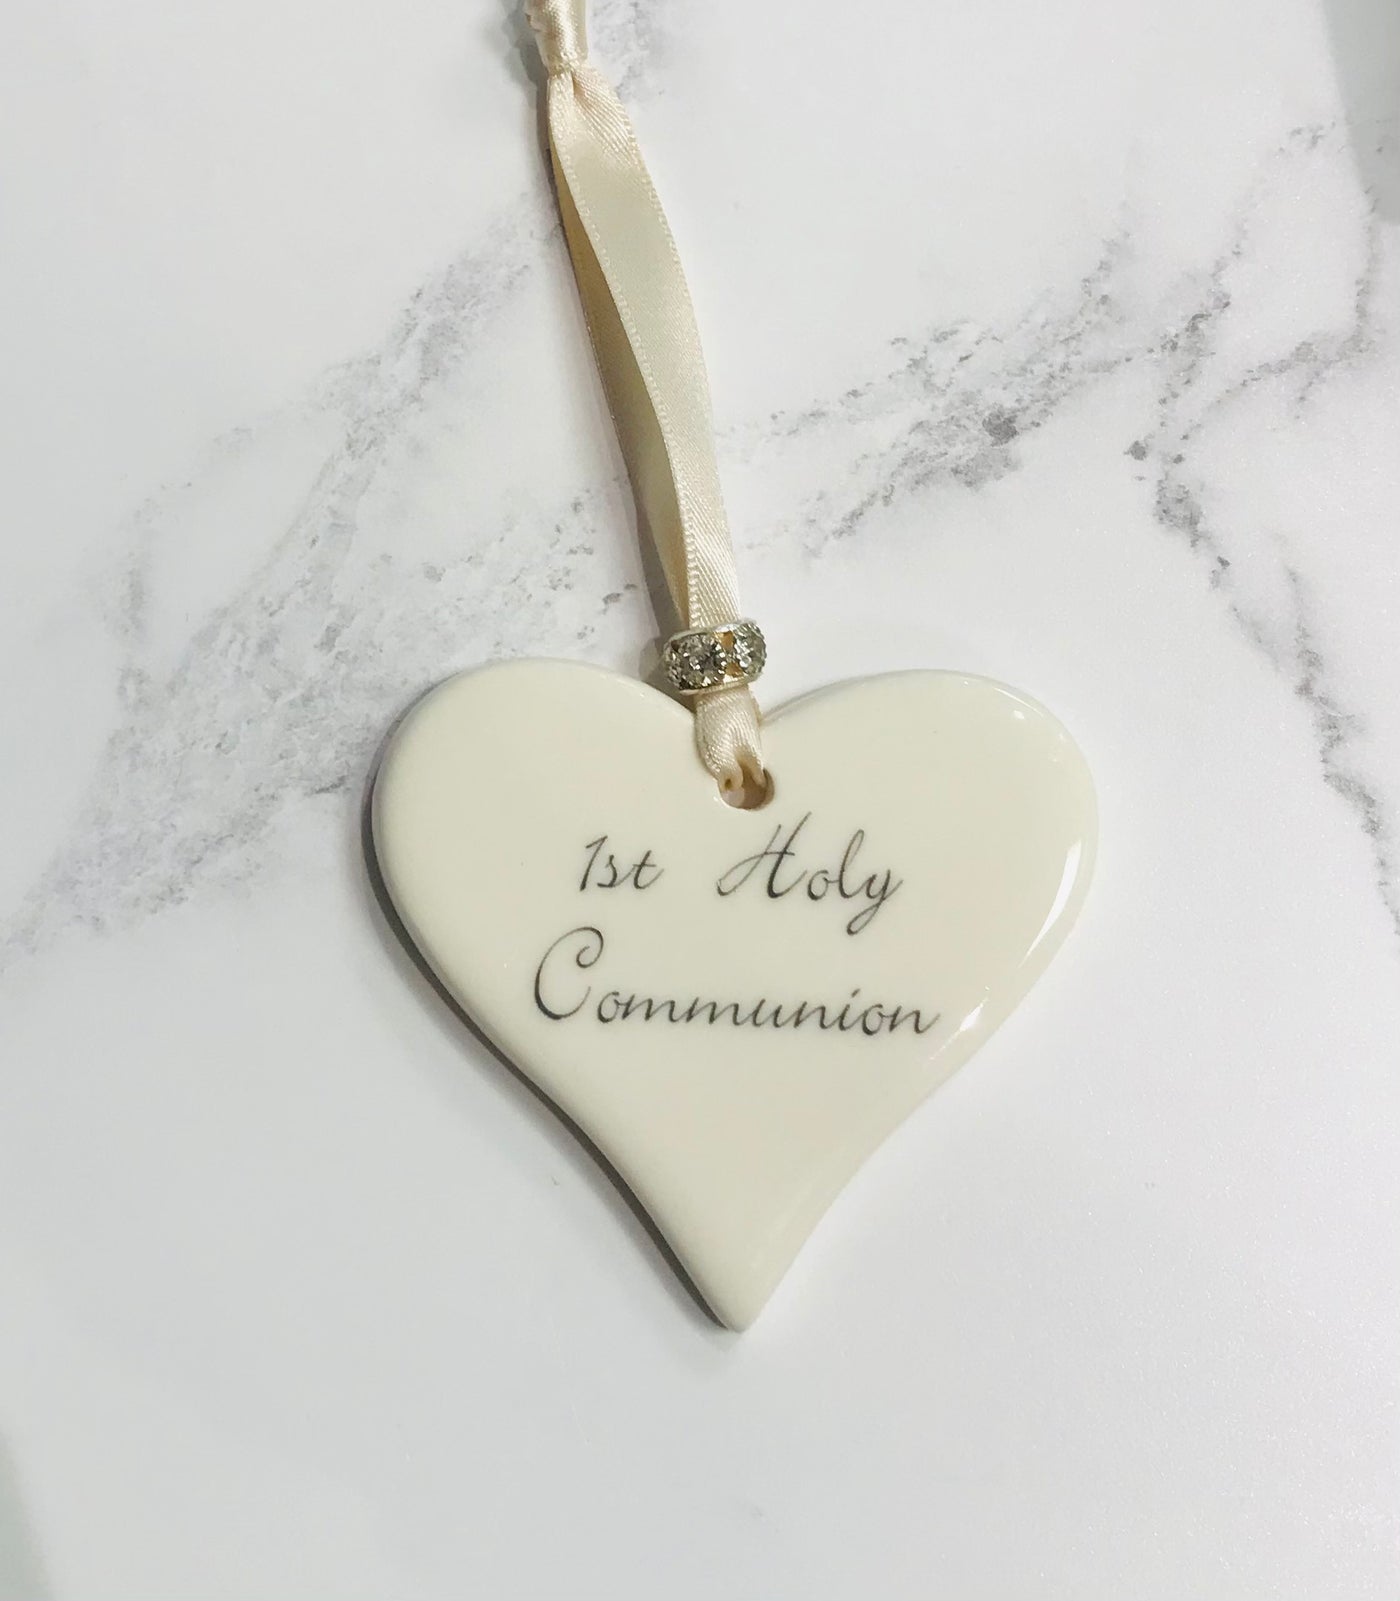 Dimbleby Ceramics Sentiment Hanging Heart - 1st Holy Communion